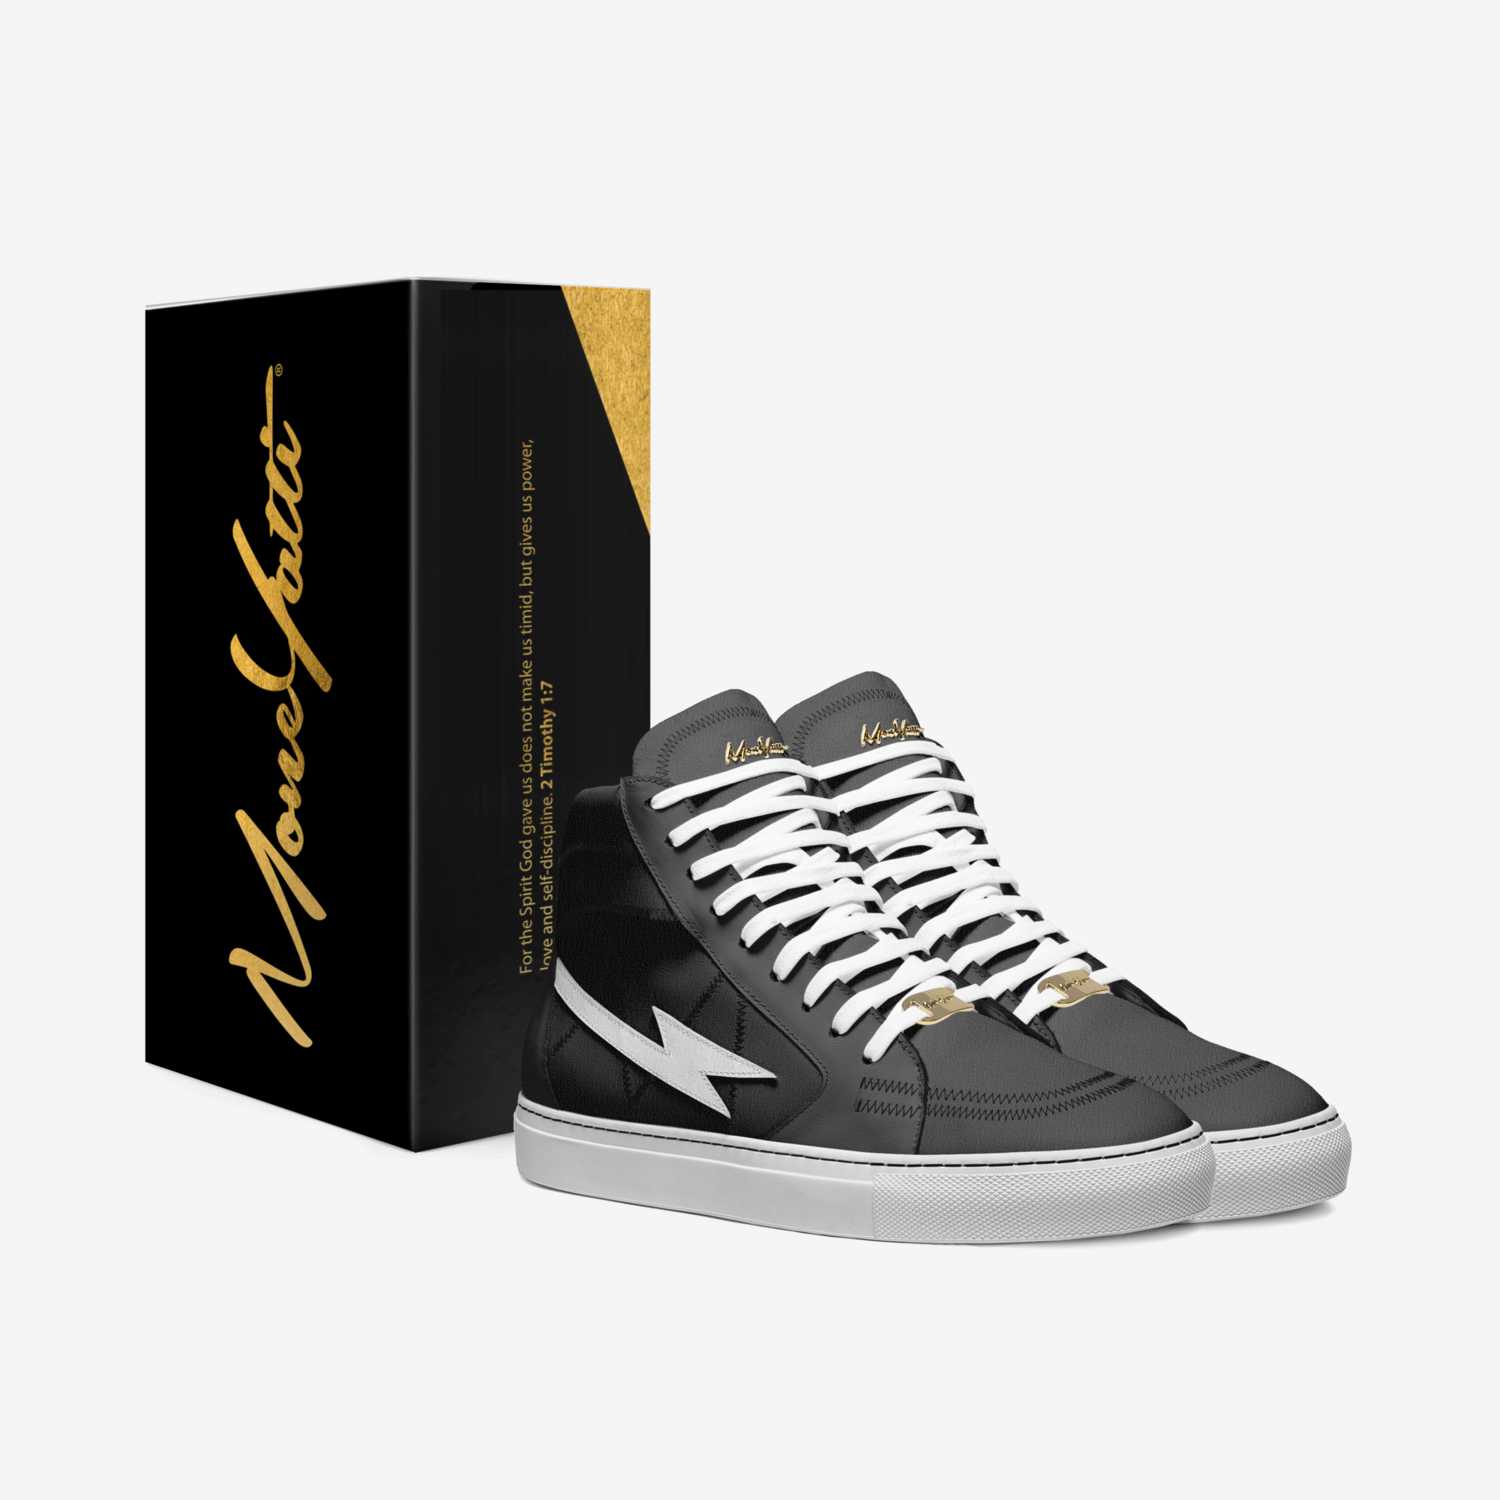 MONEYATTI REBEL 02 custom made in Italy shoes by Moneyatti Brand | Box view